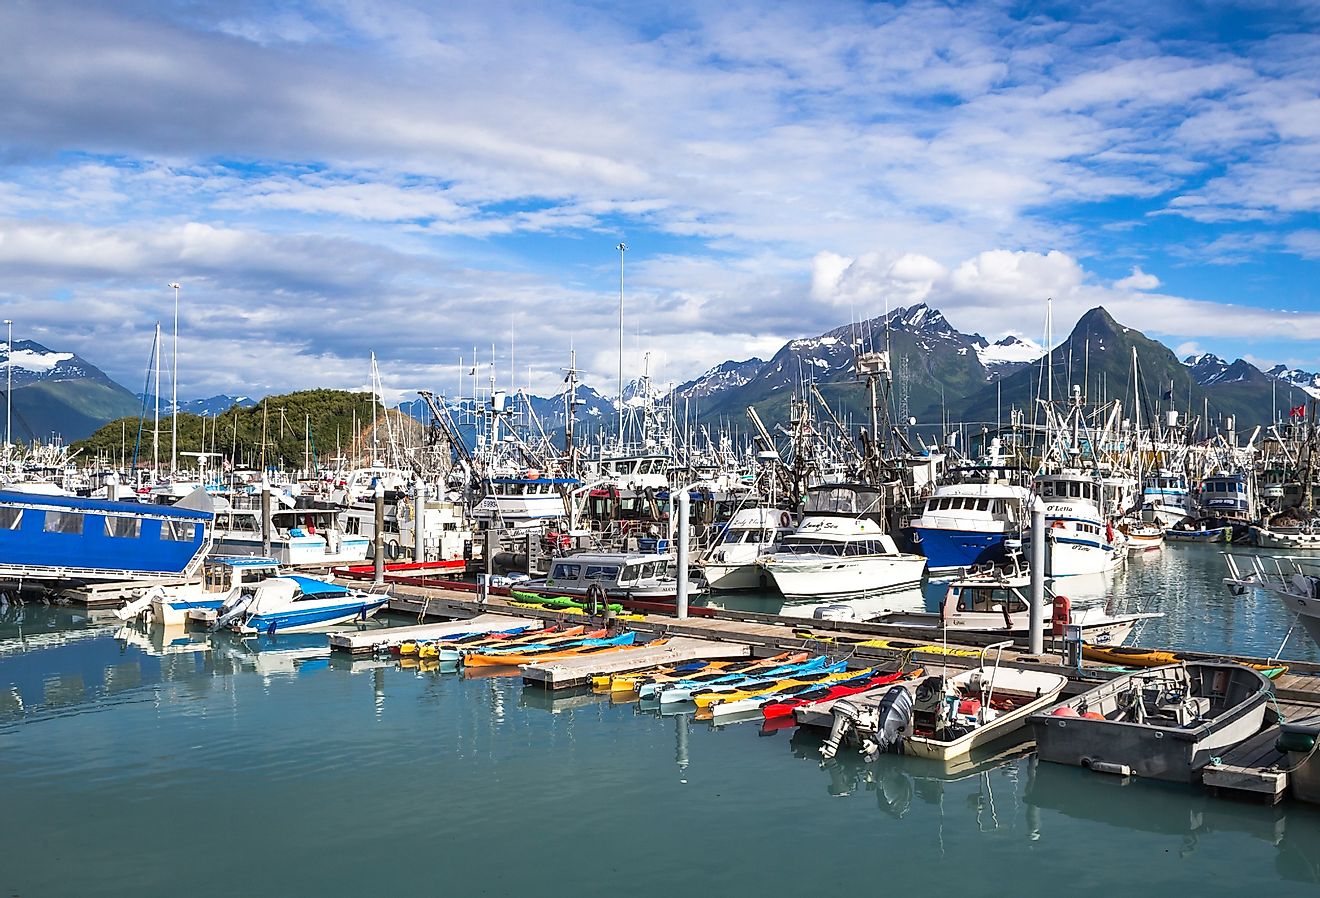 Boats and kayaks in Valdez Harbor, Alaska. Image credit Victoria Ditkovsky via Shutterstock